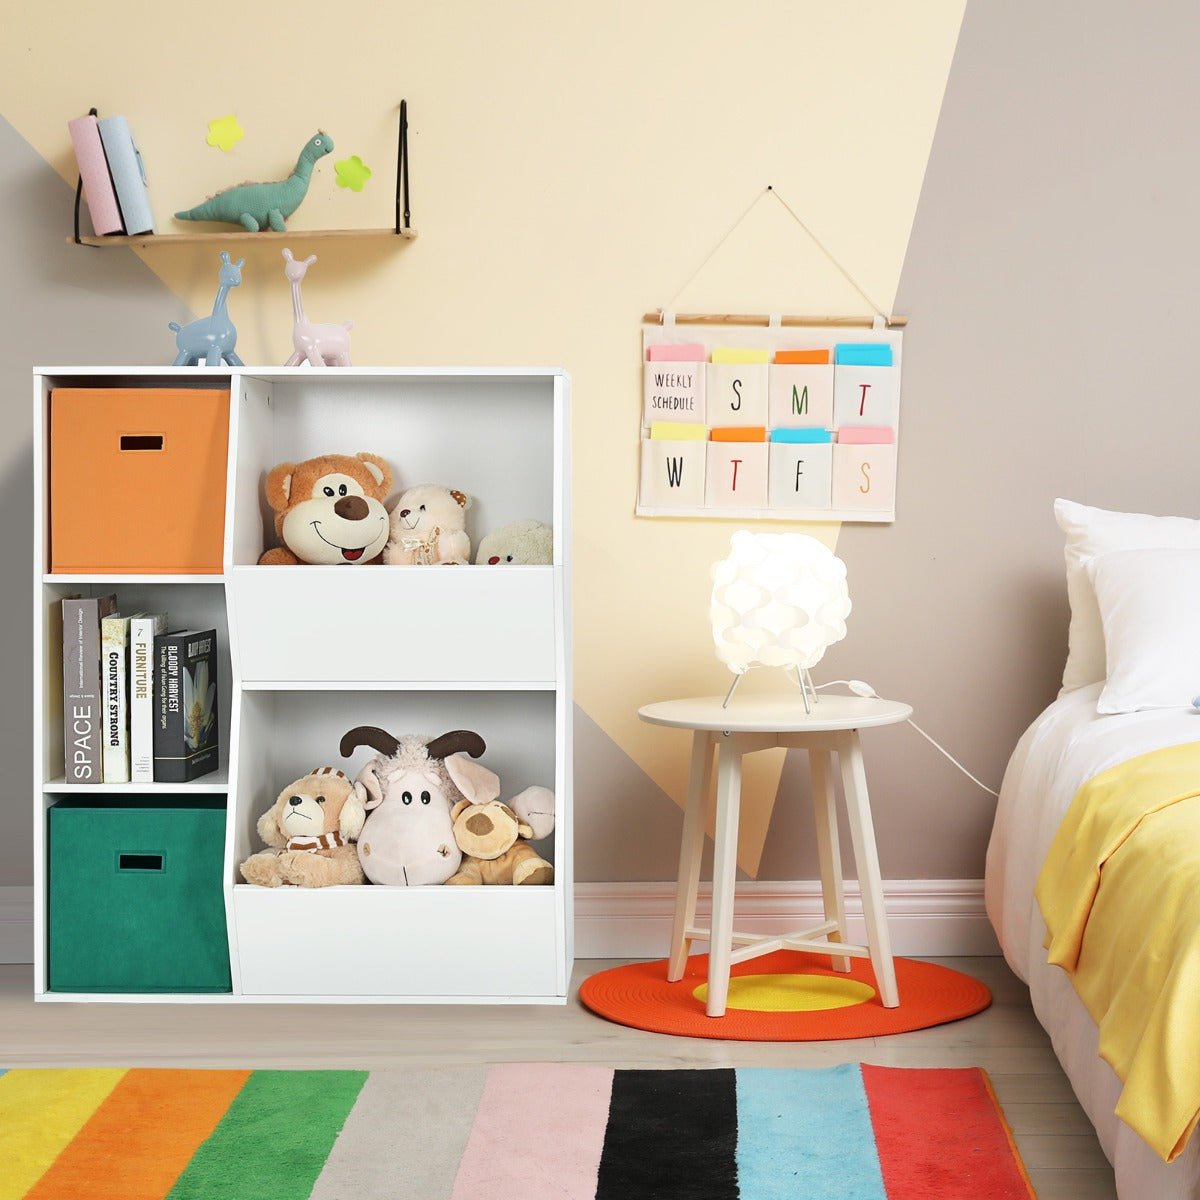 Neat Toy Organization - Kid’s Room Storage with 2 Baskets